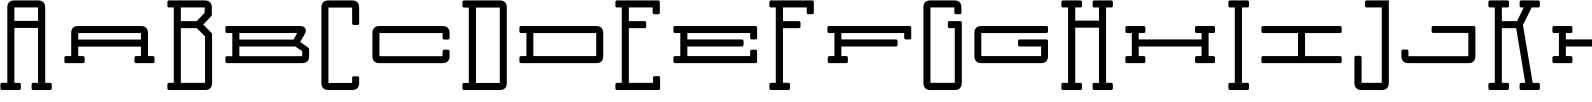 Two Letter Monogram Font